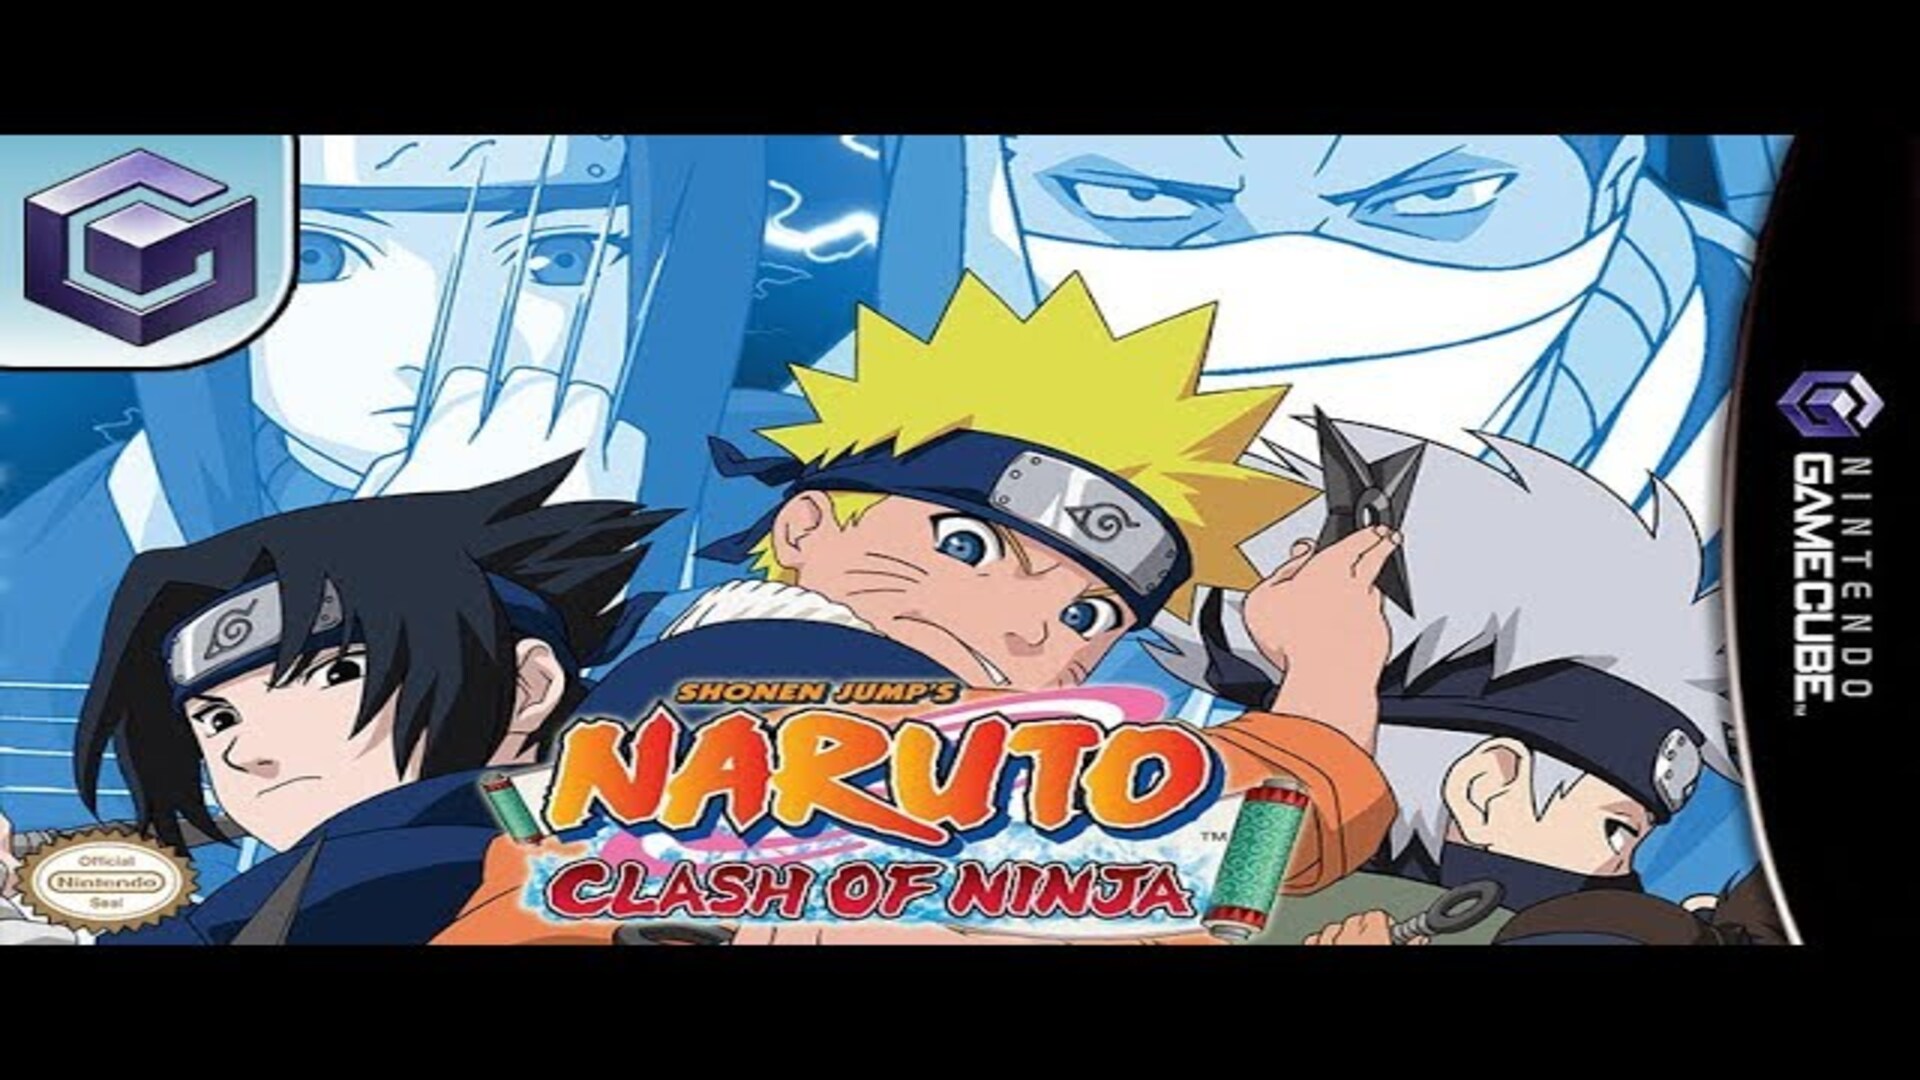 Todos-os-jogos-de-Naruto-ja-lancados-Clash-of-Ninja